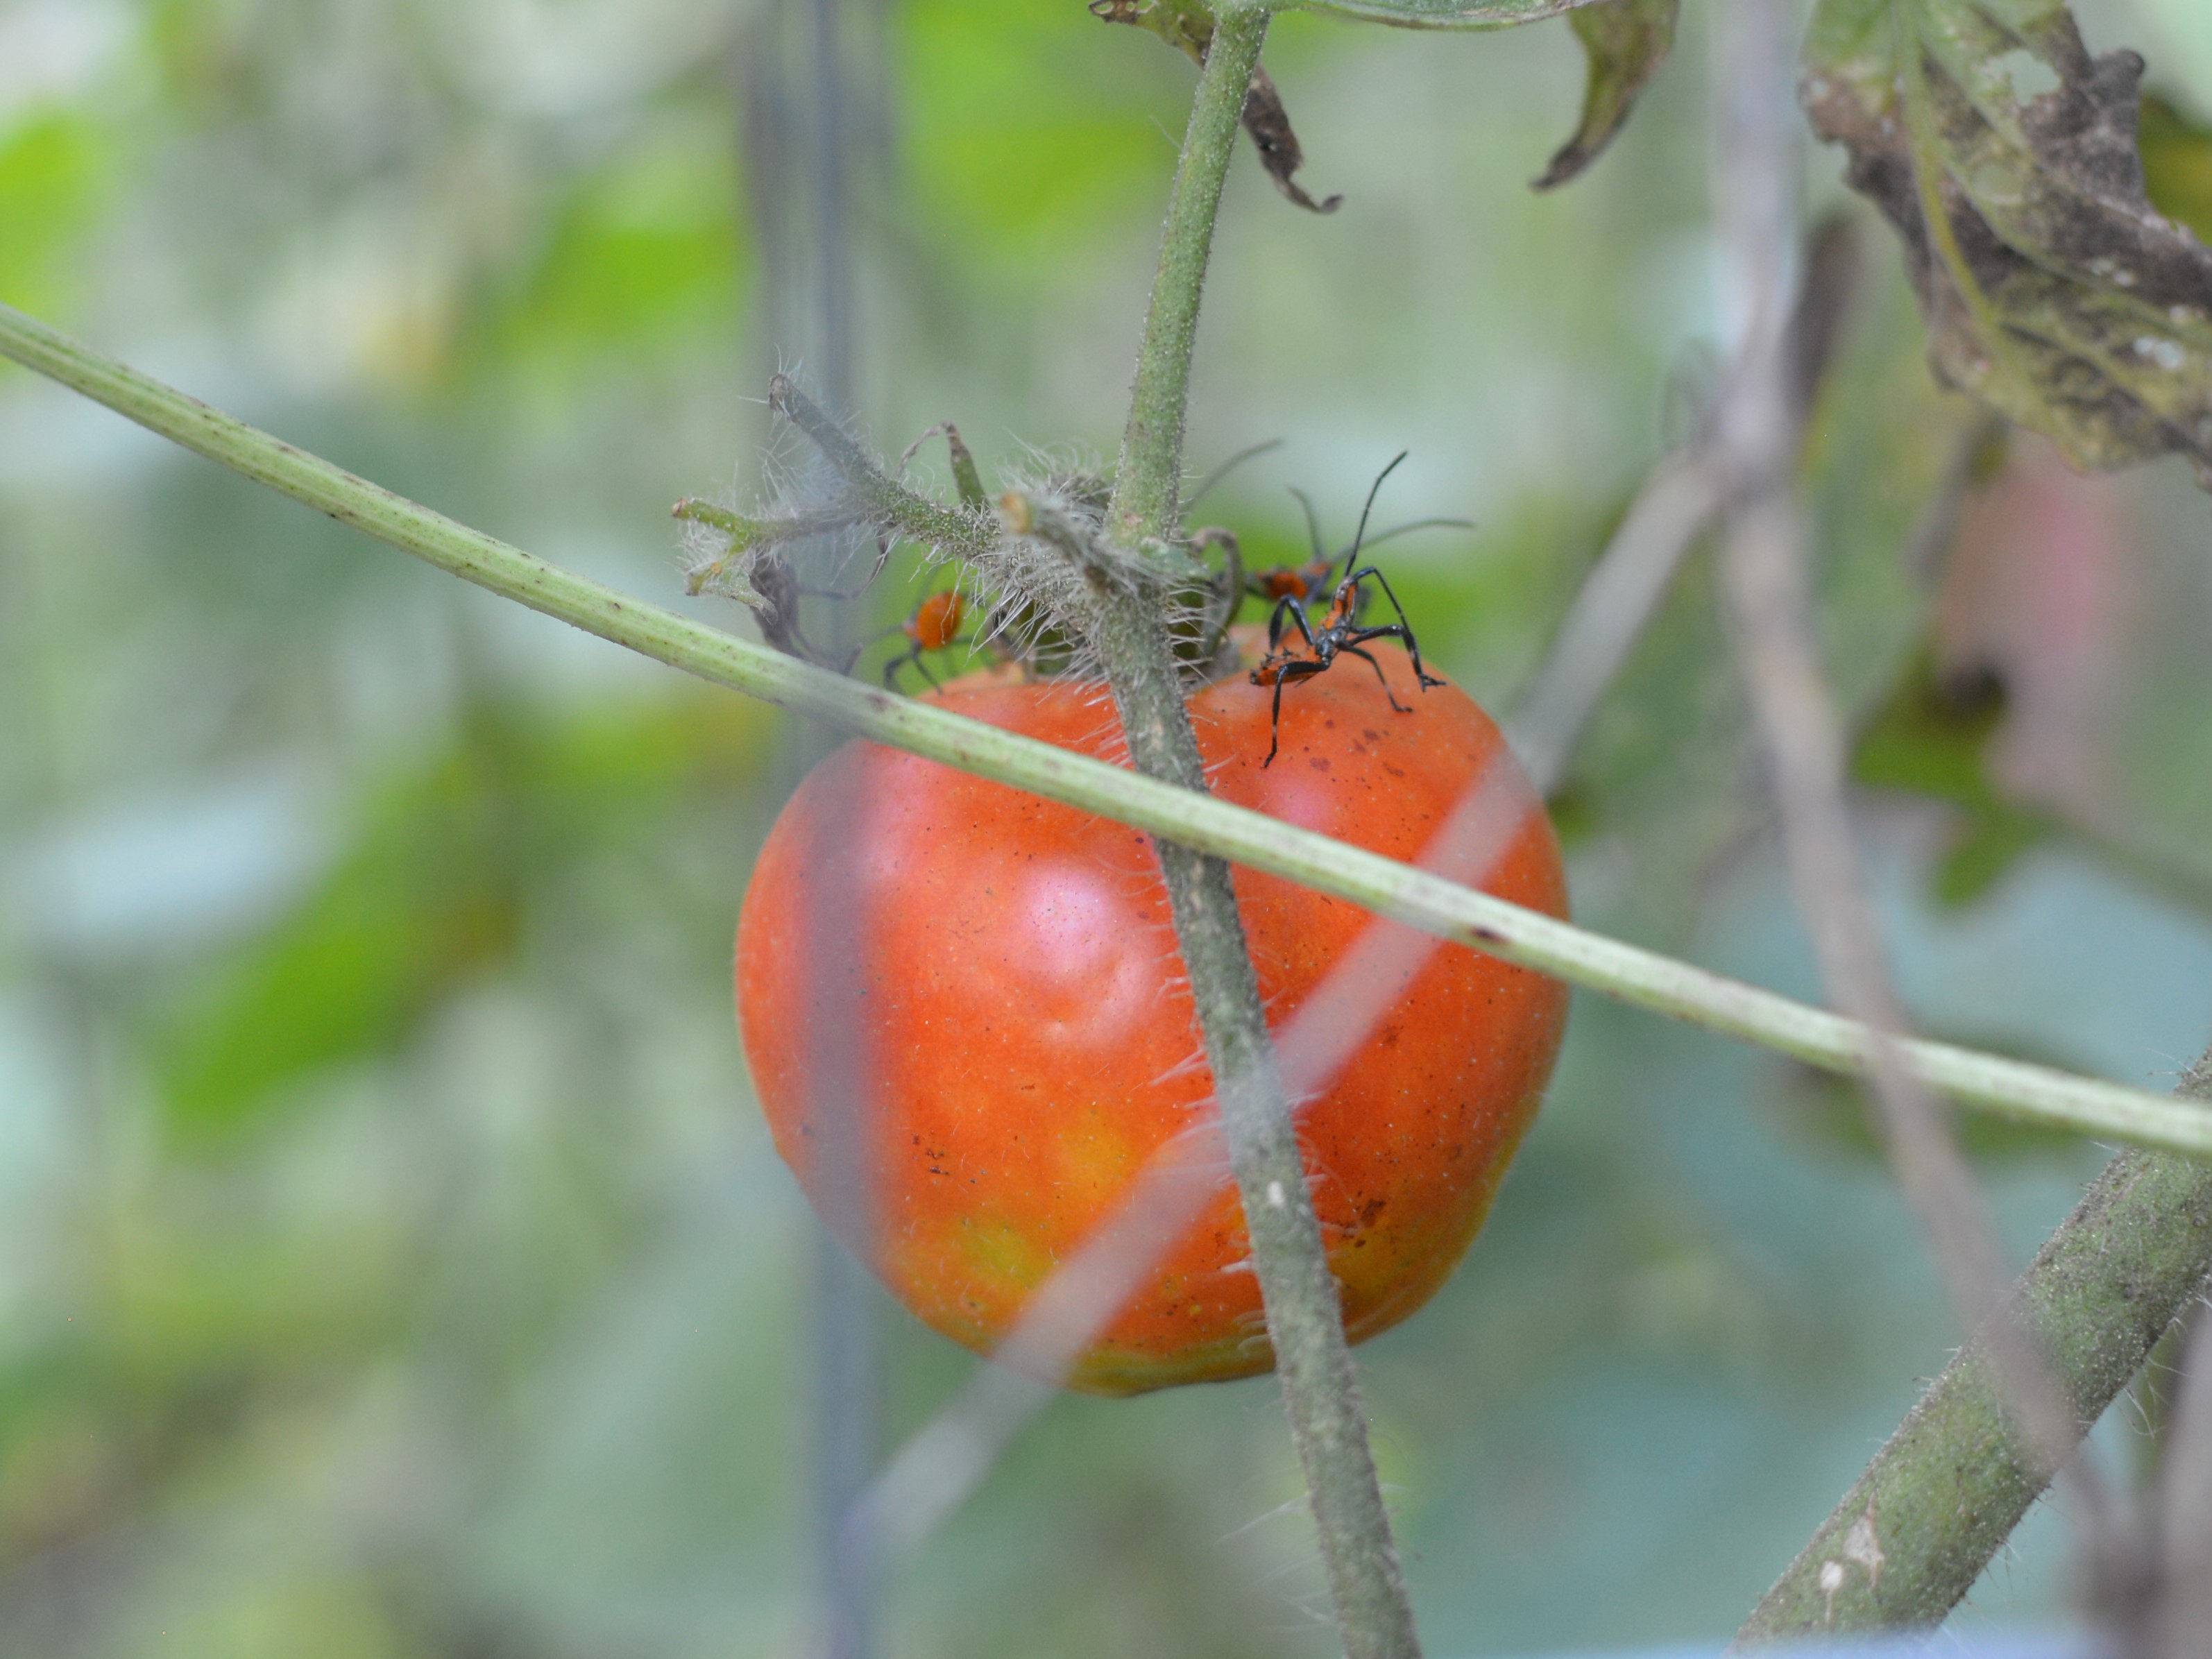 Laying claim to a late season tomato